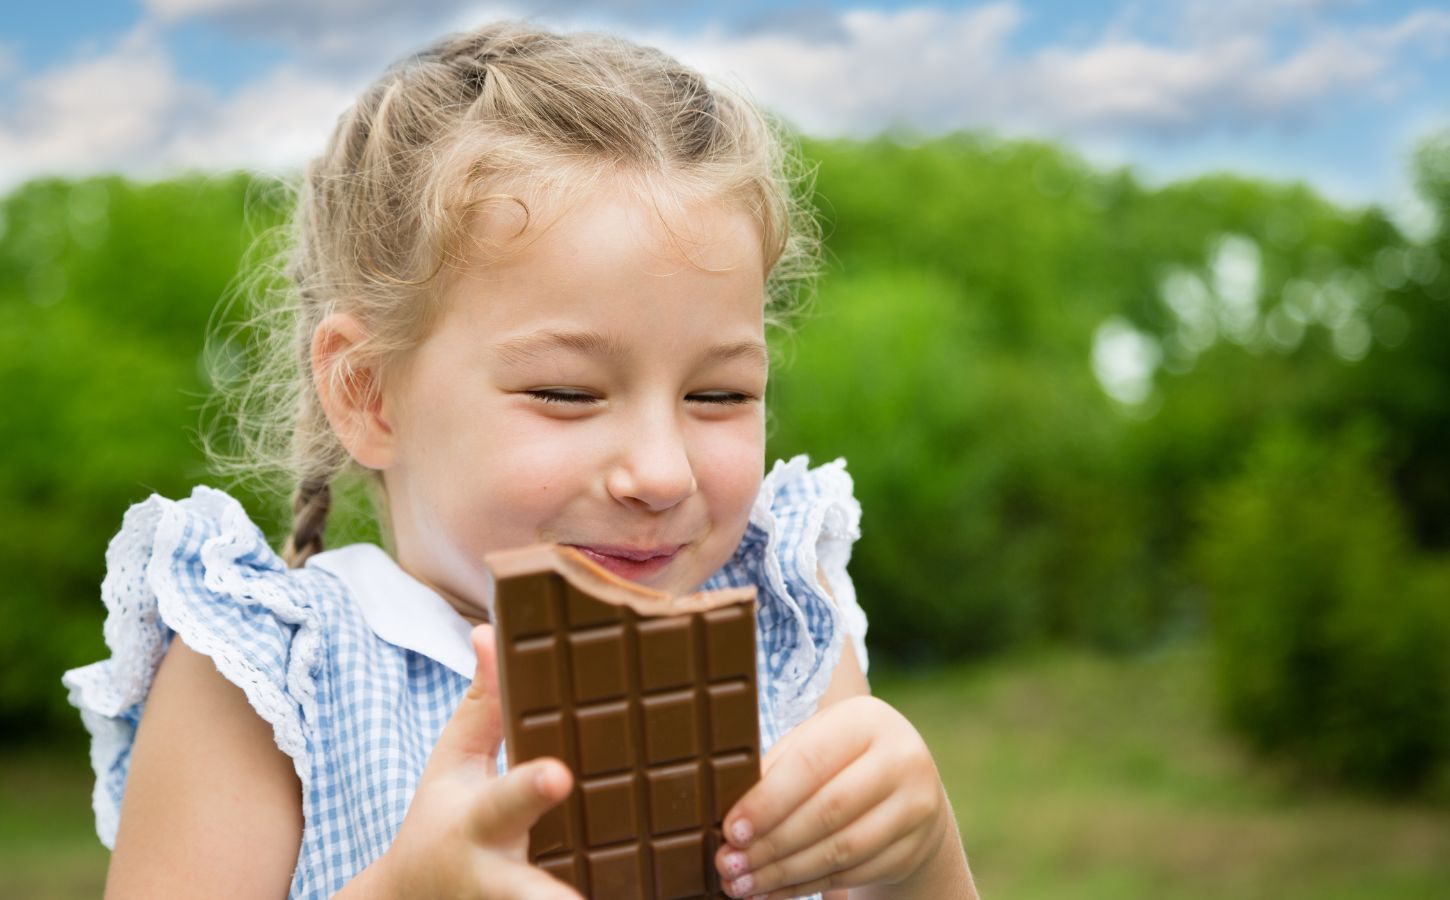 A young girl eating vegan chocolate